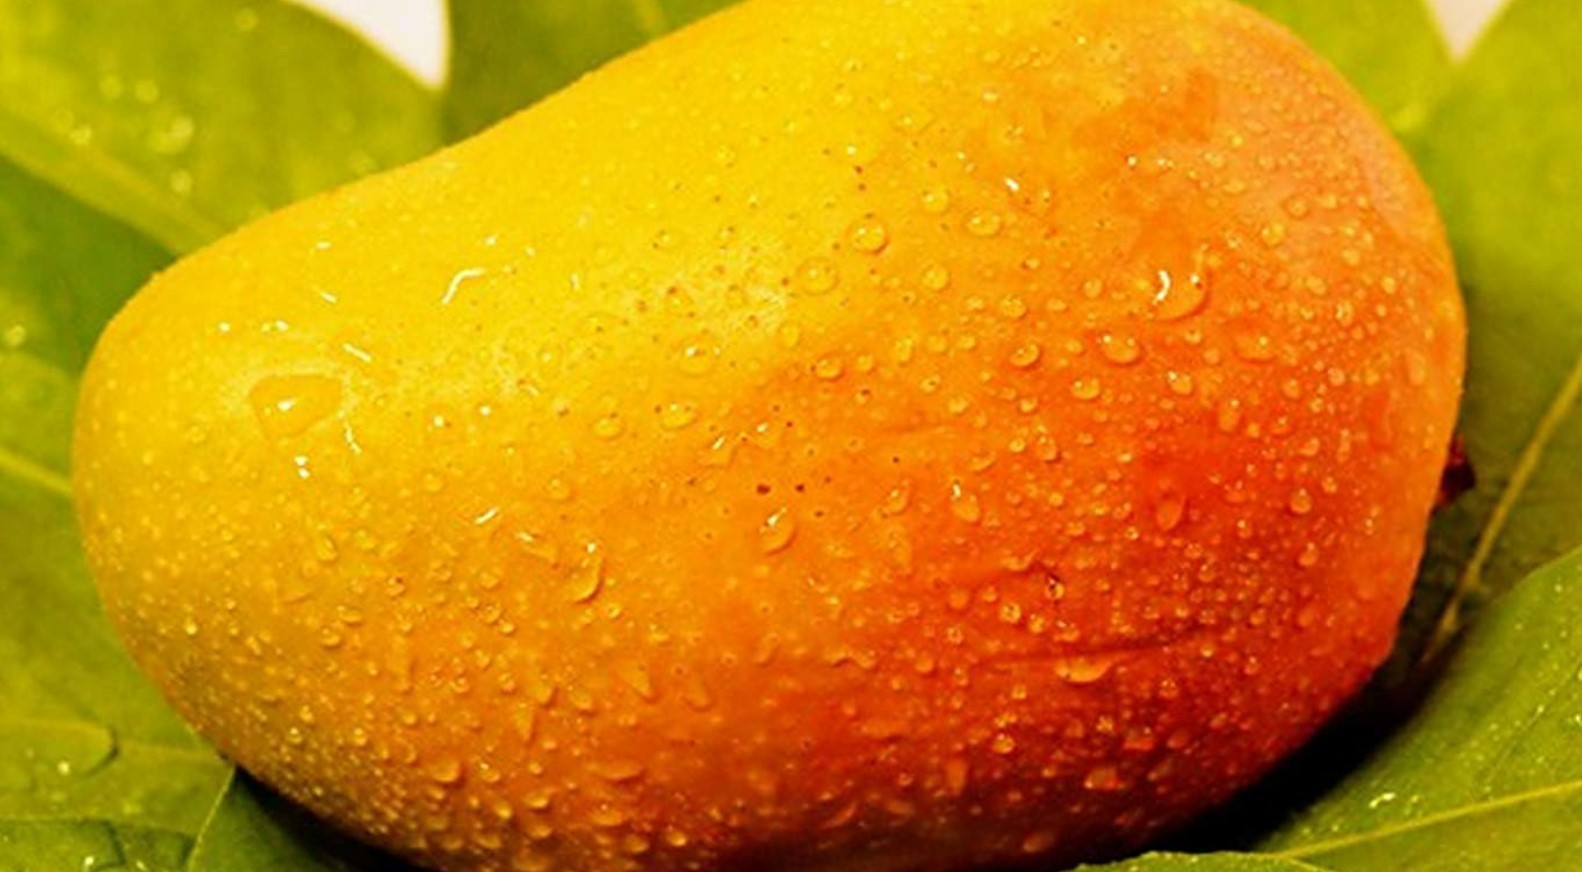 Crisis on mango cultivators.